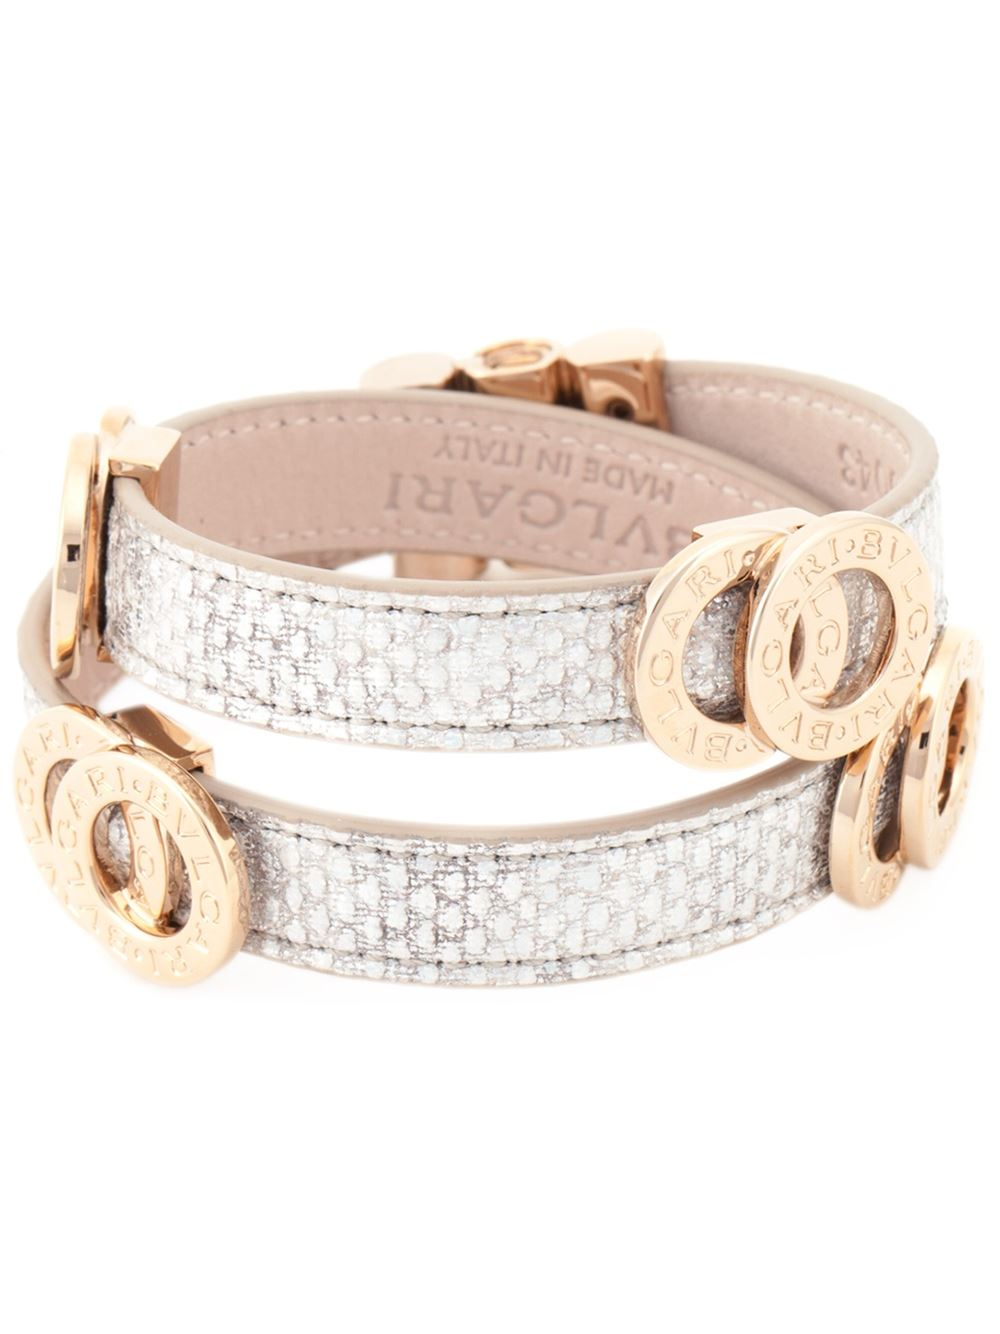 BVLGARI Double Coiled Wrap Bracelet in 